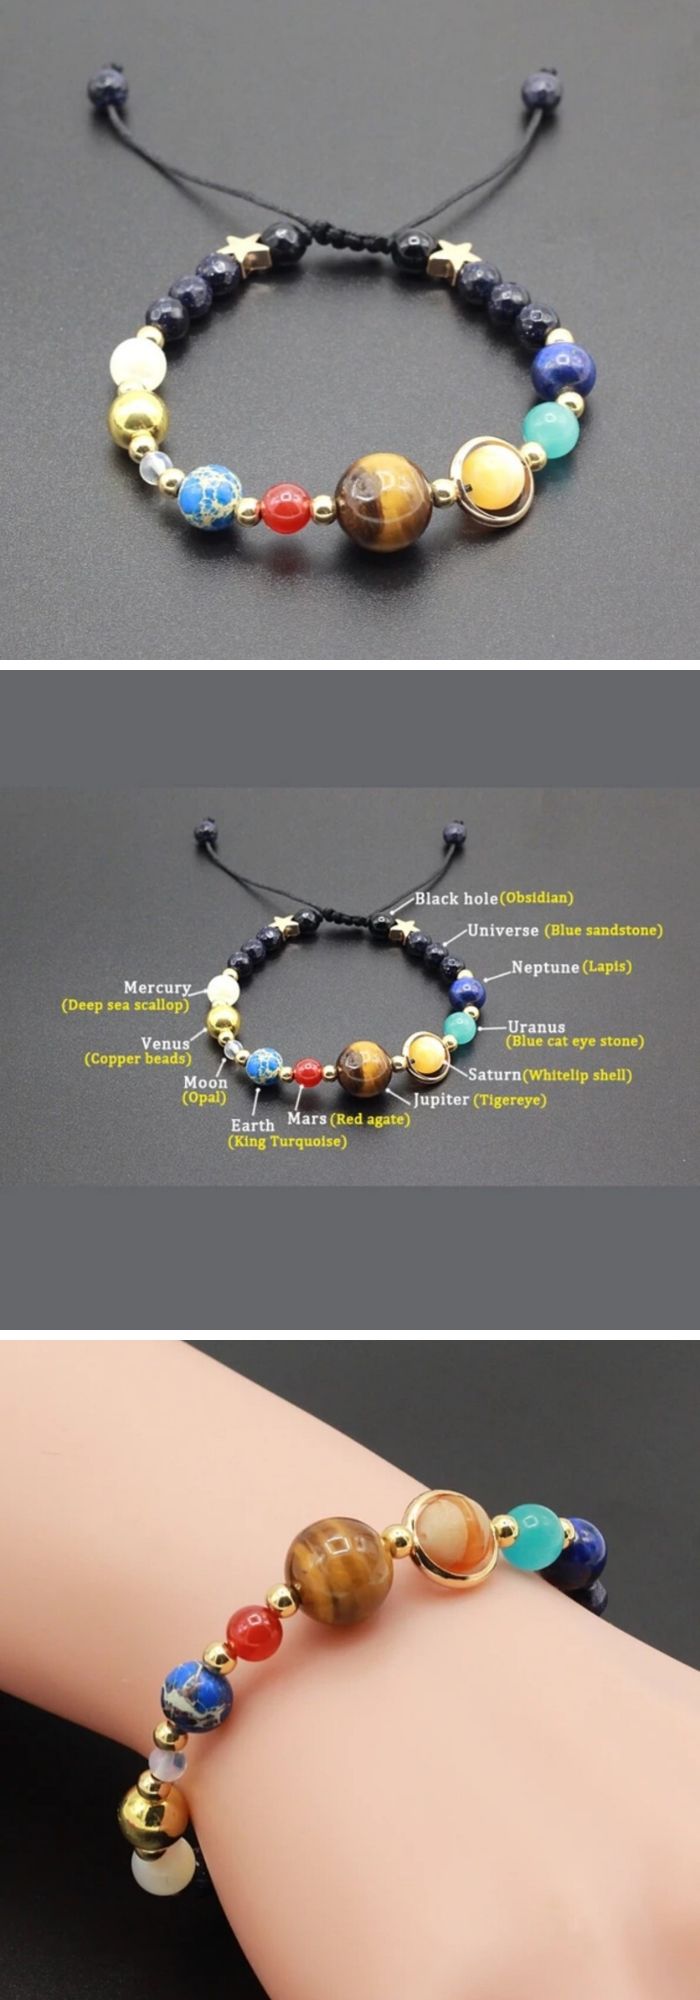 12 diy bracelets for boyfriends